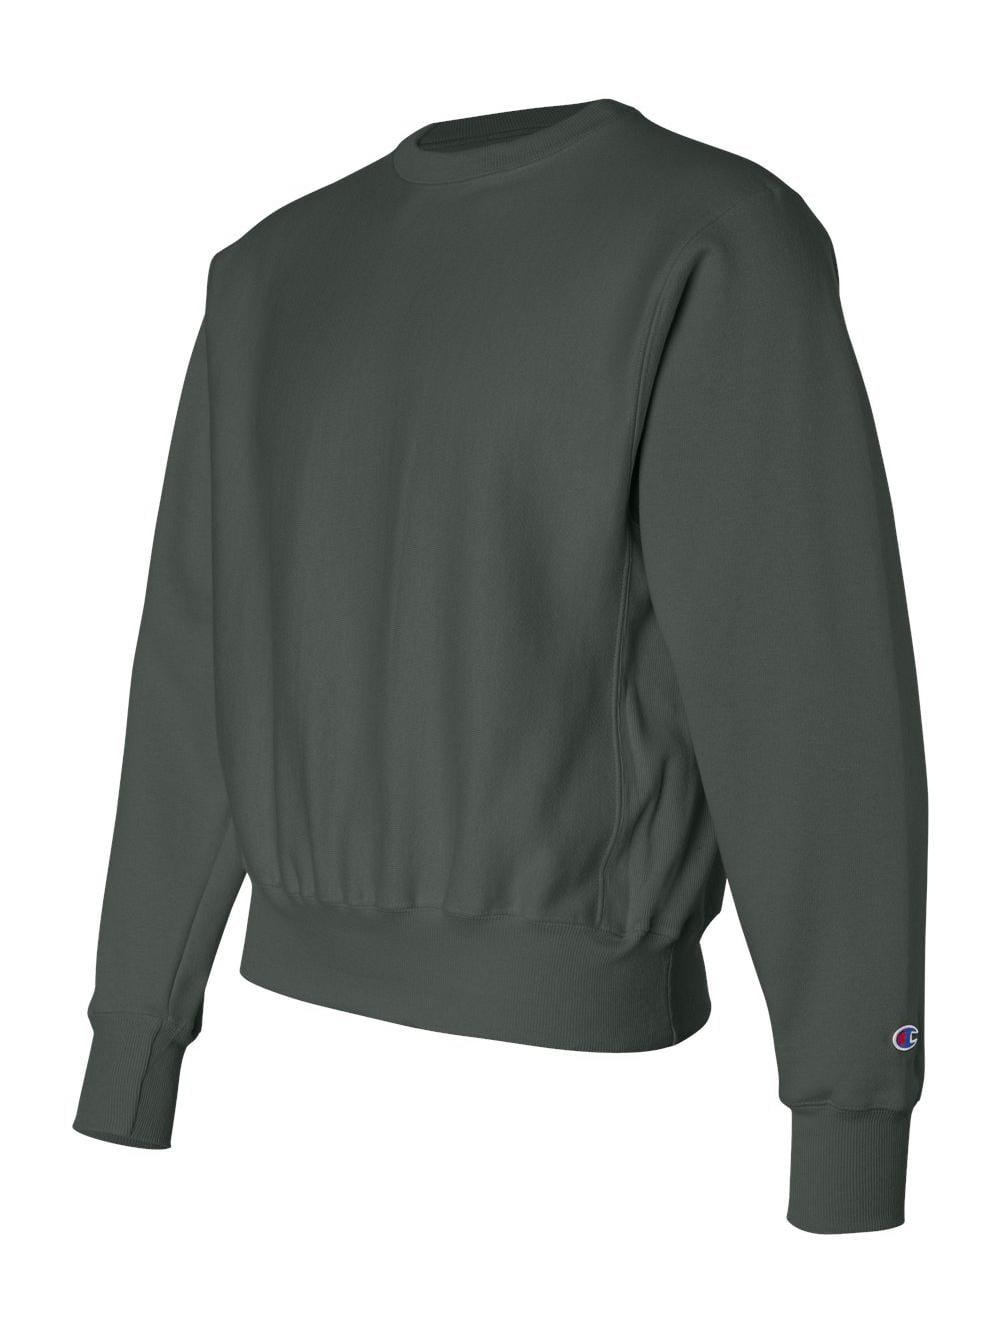 Champion - Reverse Weave Crewneck Sweatshirt - S149 - Walmart.com